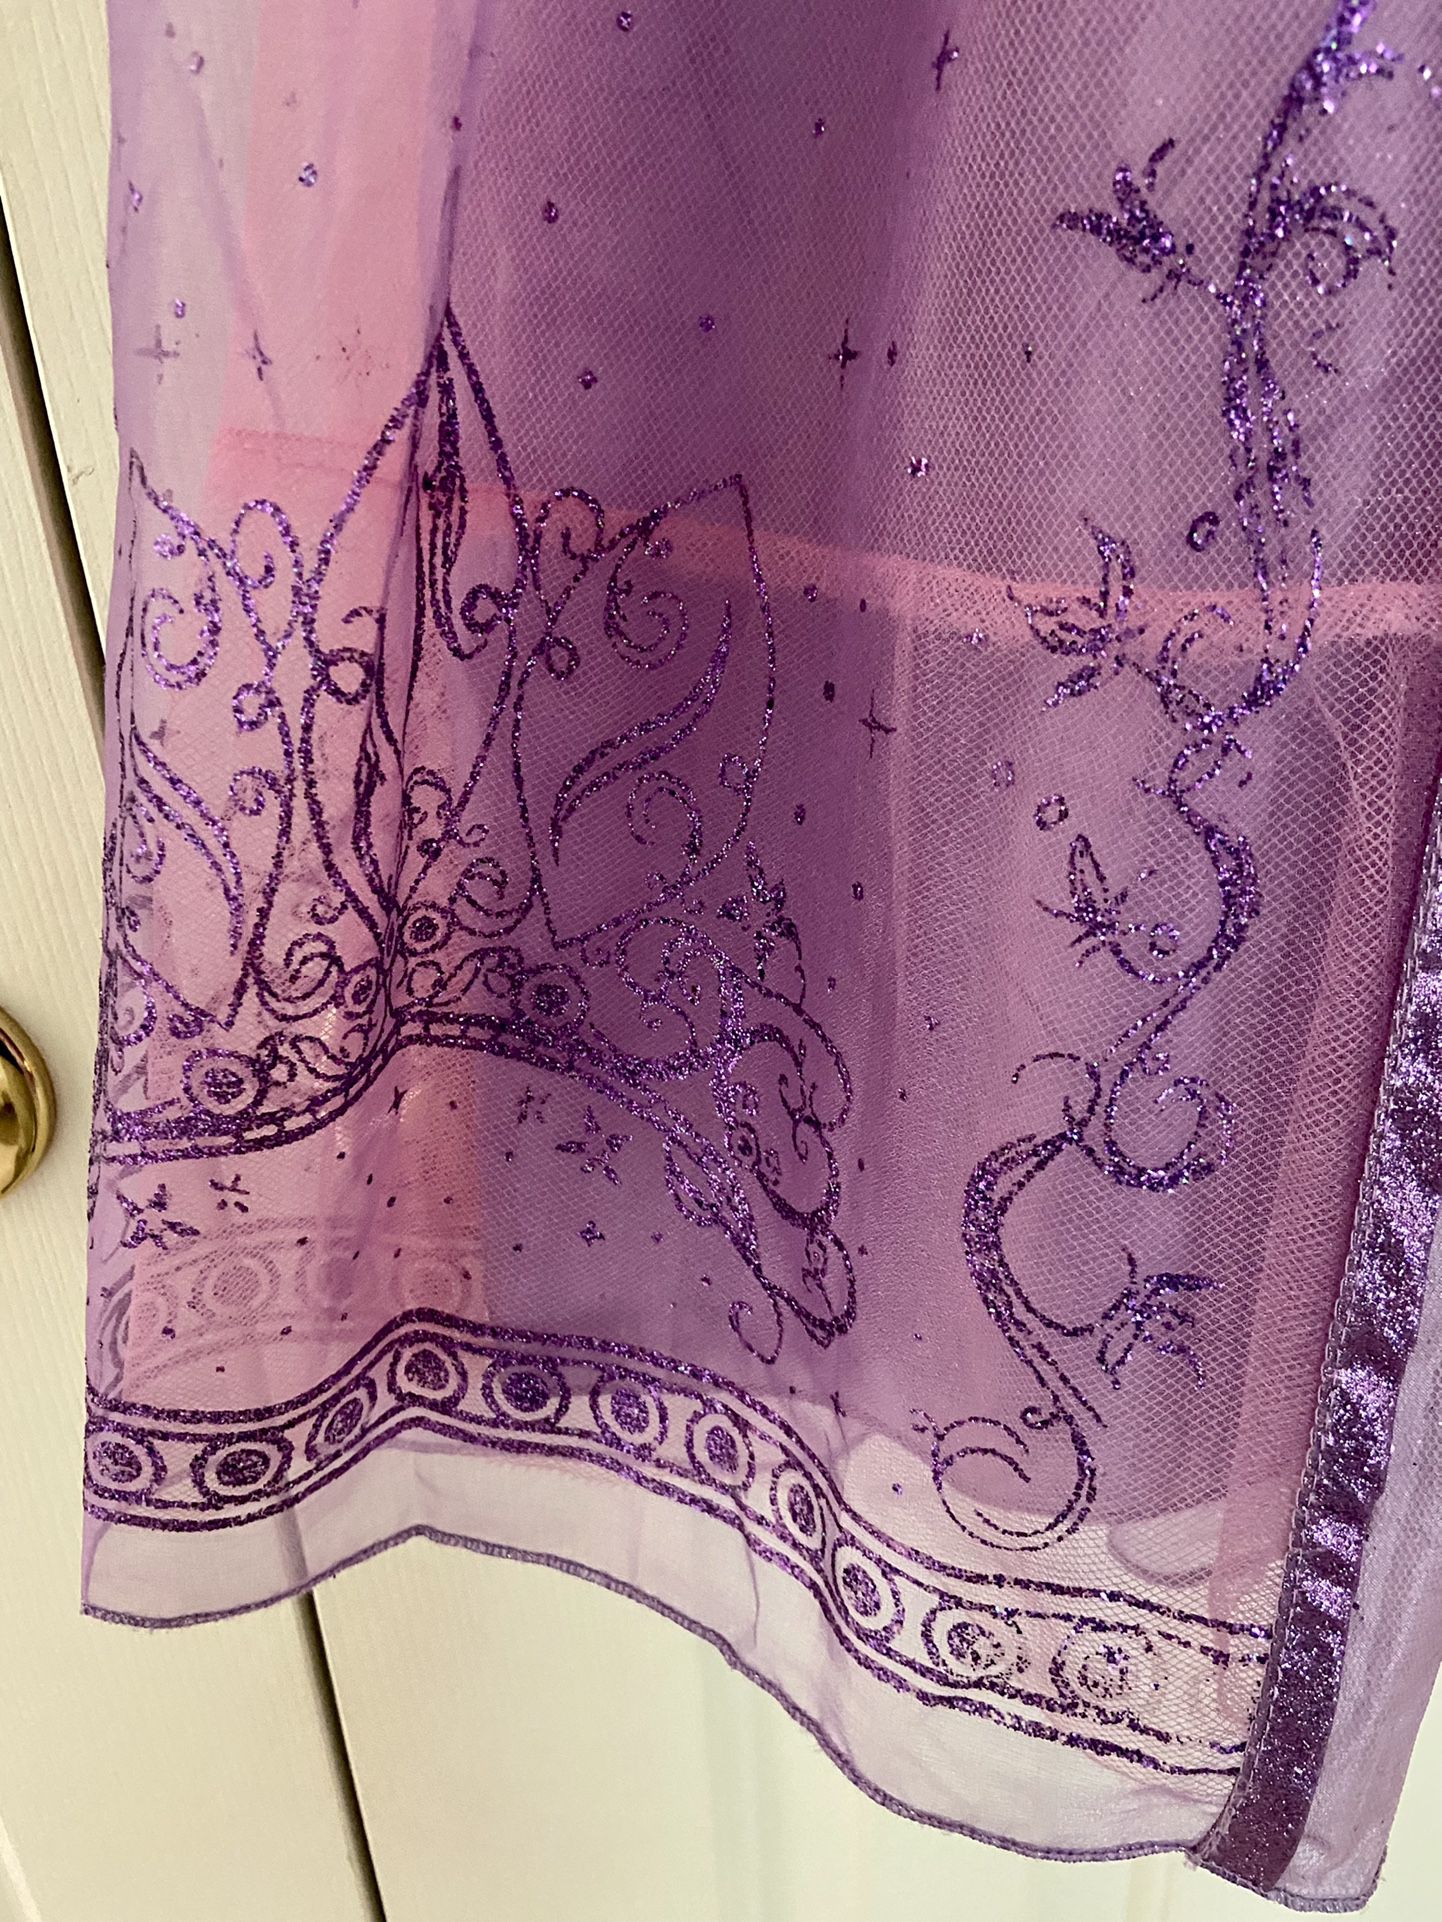 Disney Store Authentic Princess Tangled Rapunzel  Costume